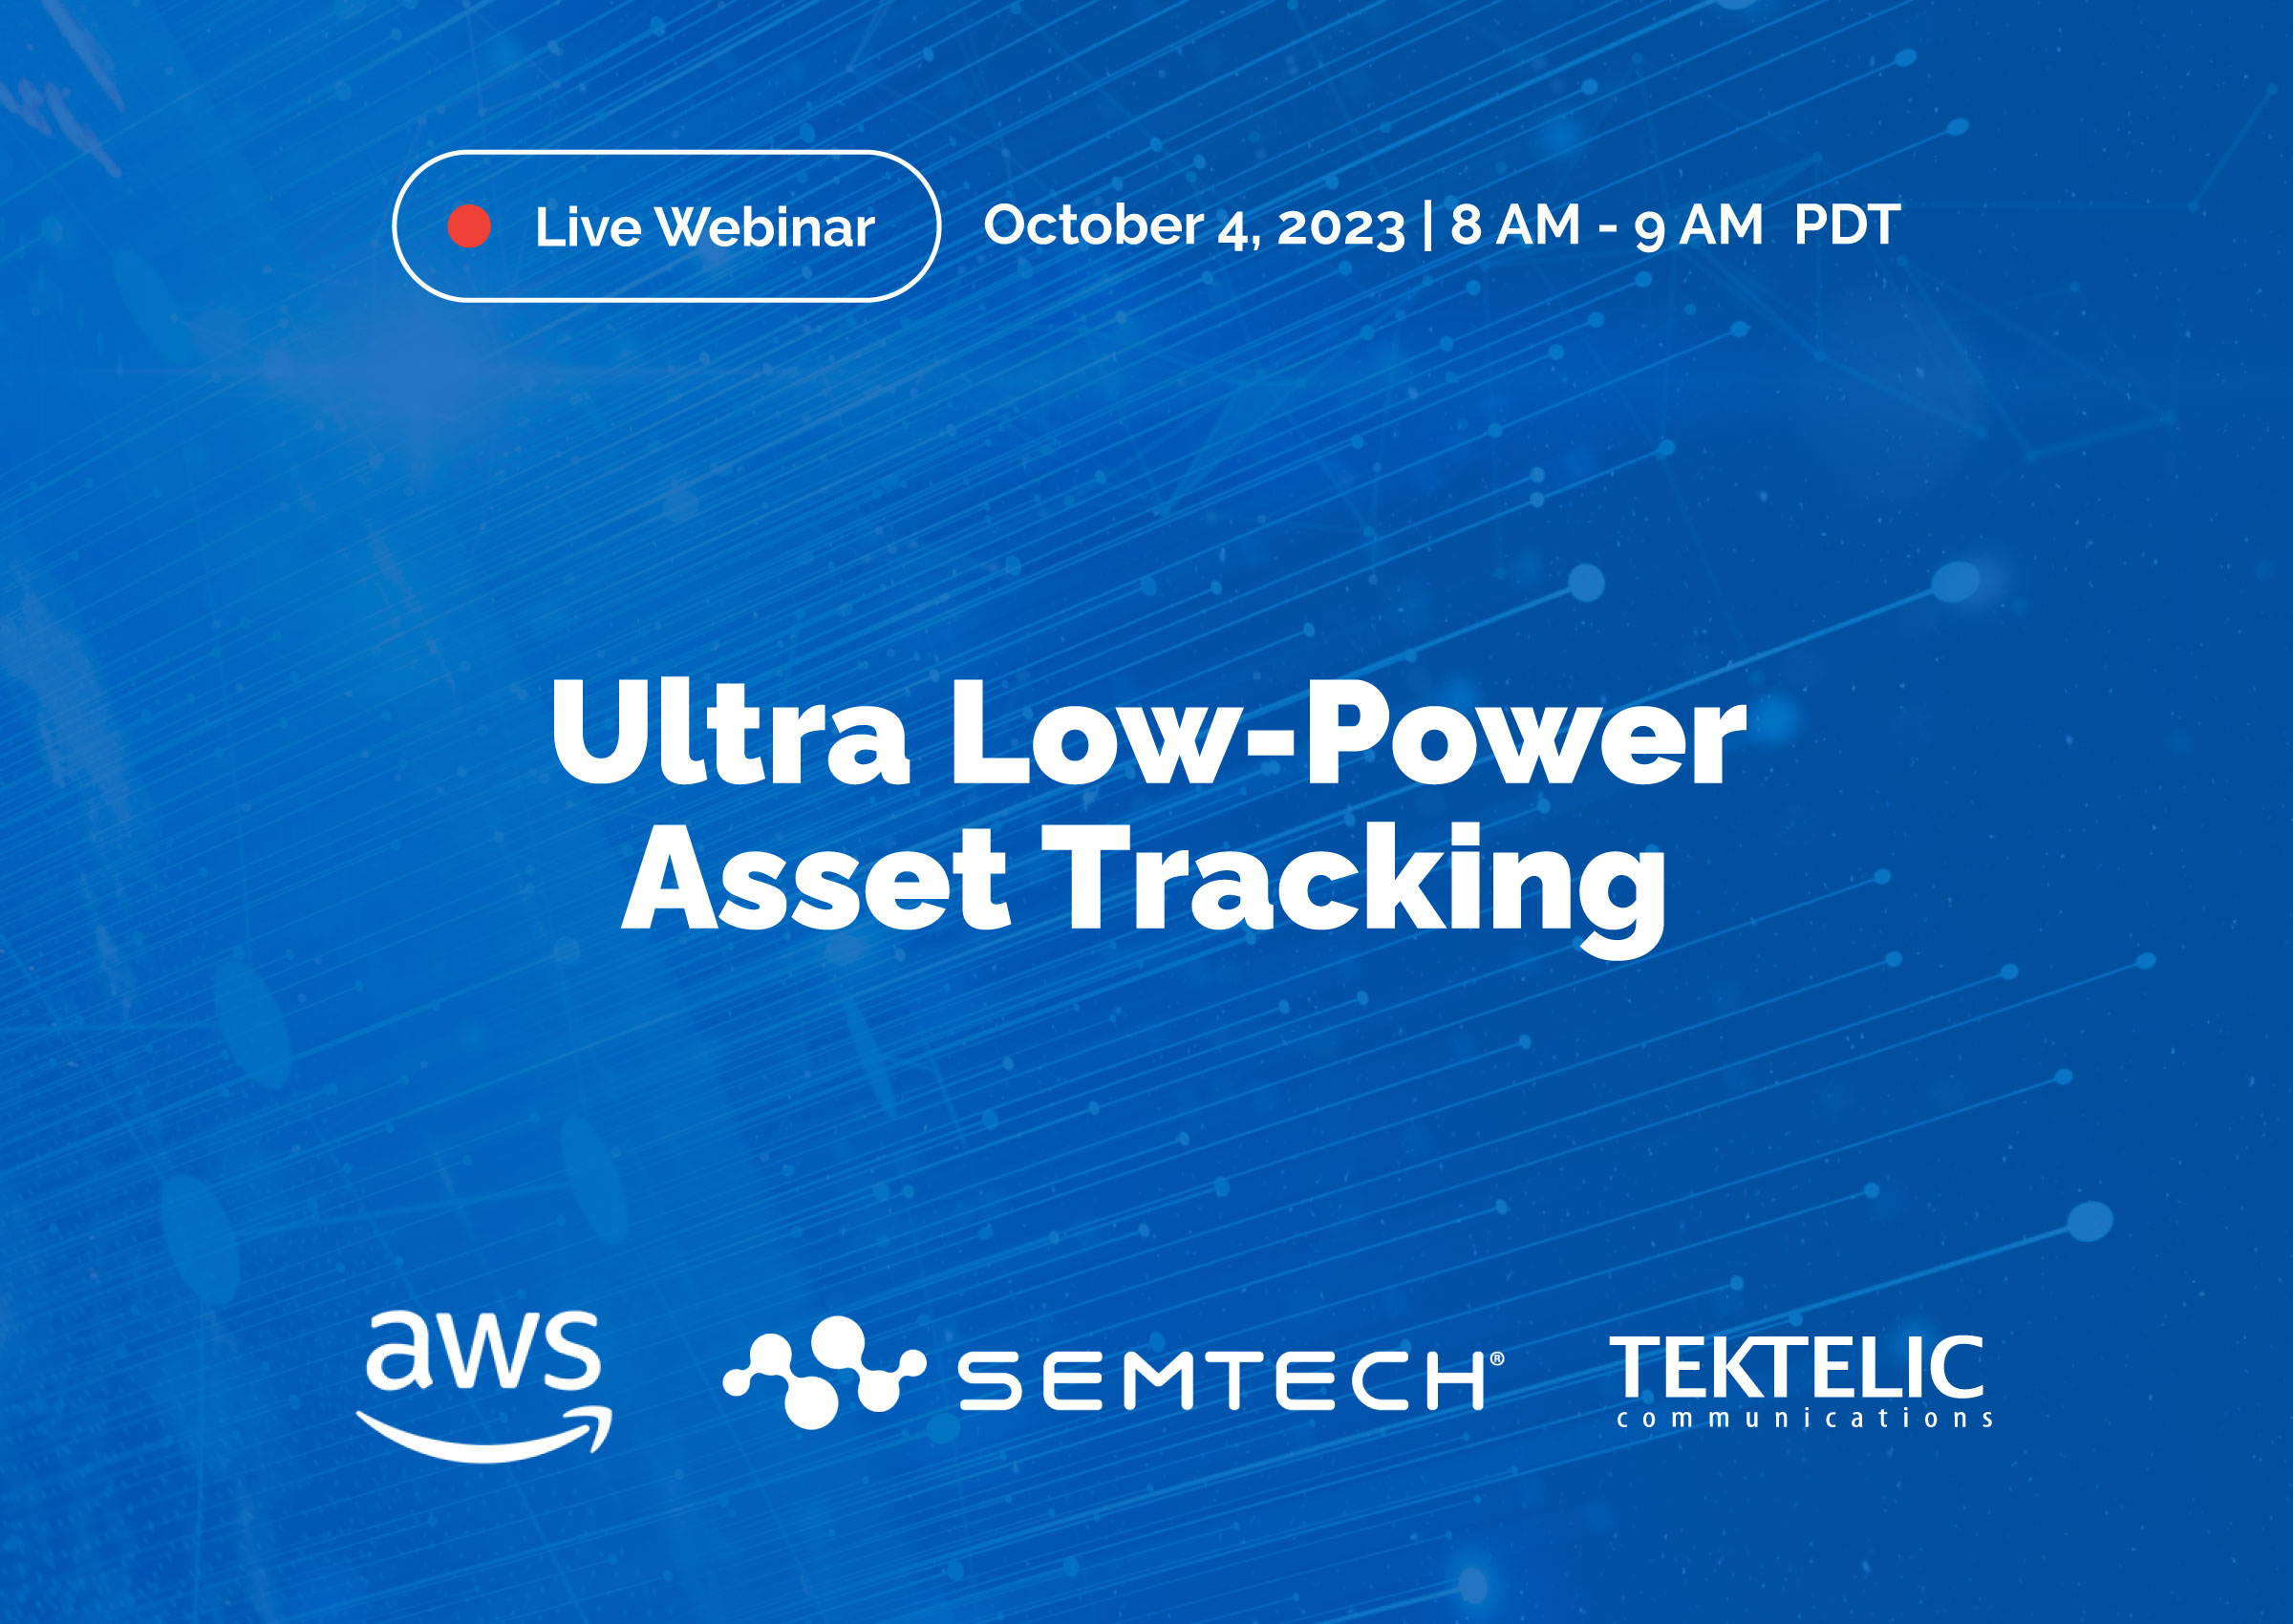 TEKTELIC joins Semtech webinar on low-power asset tracking solutions built on AWS